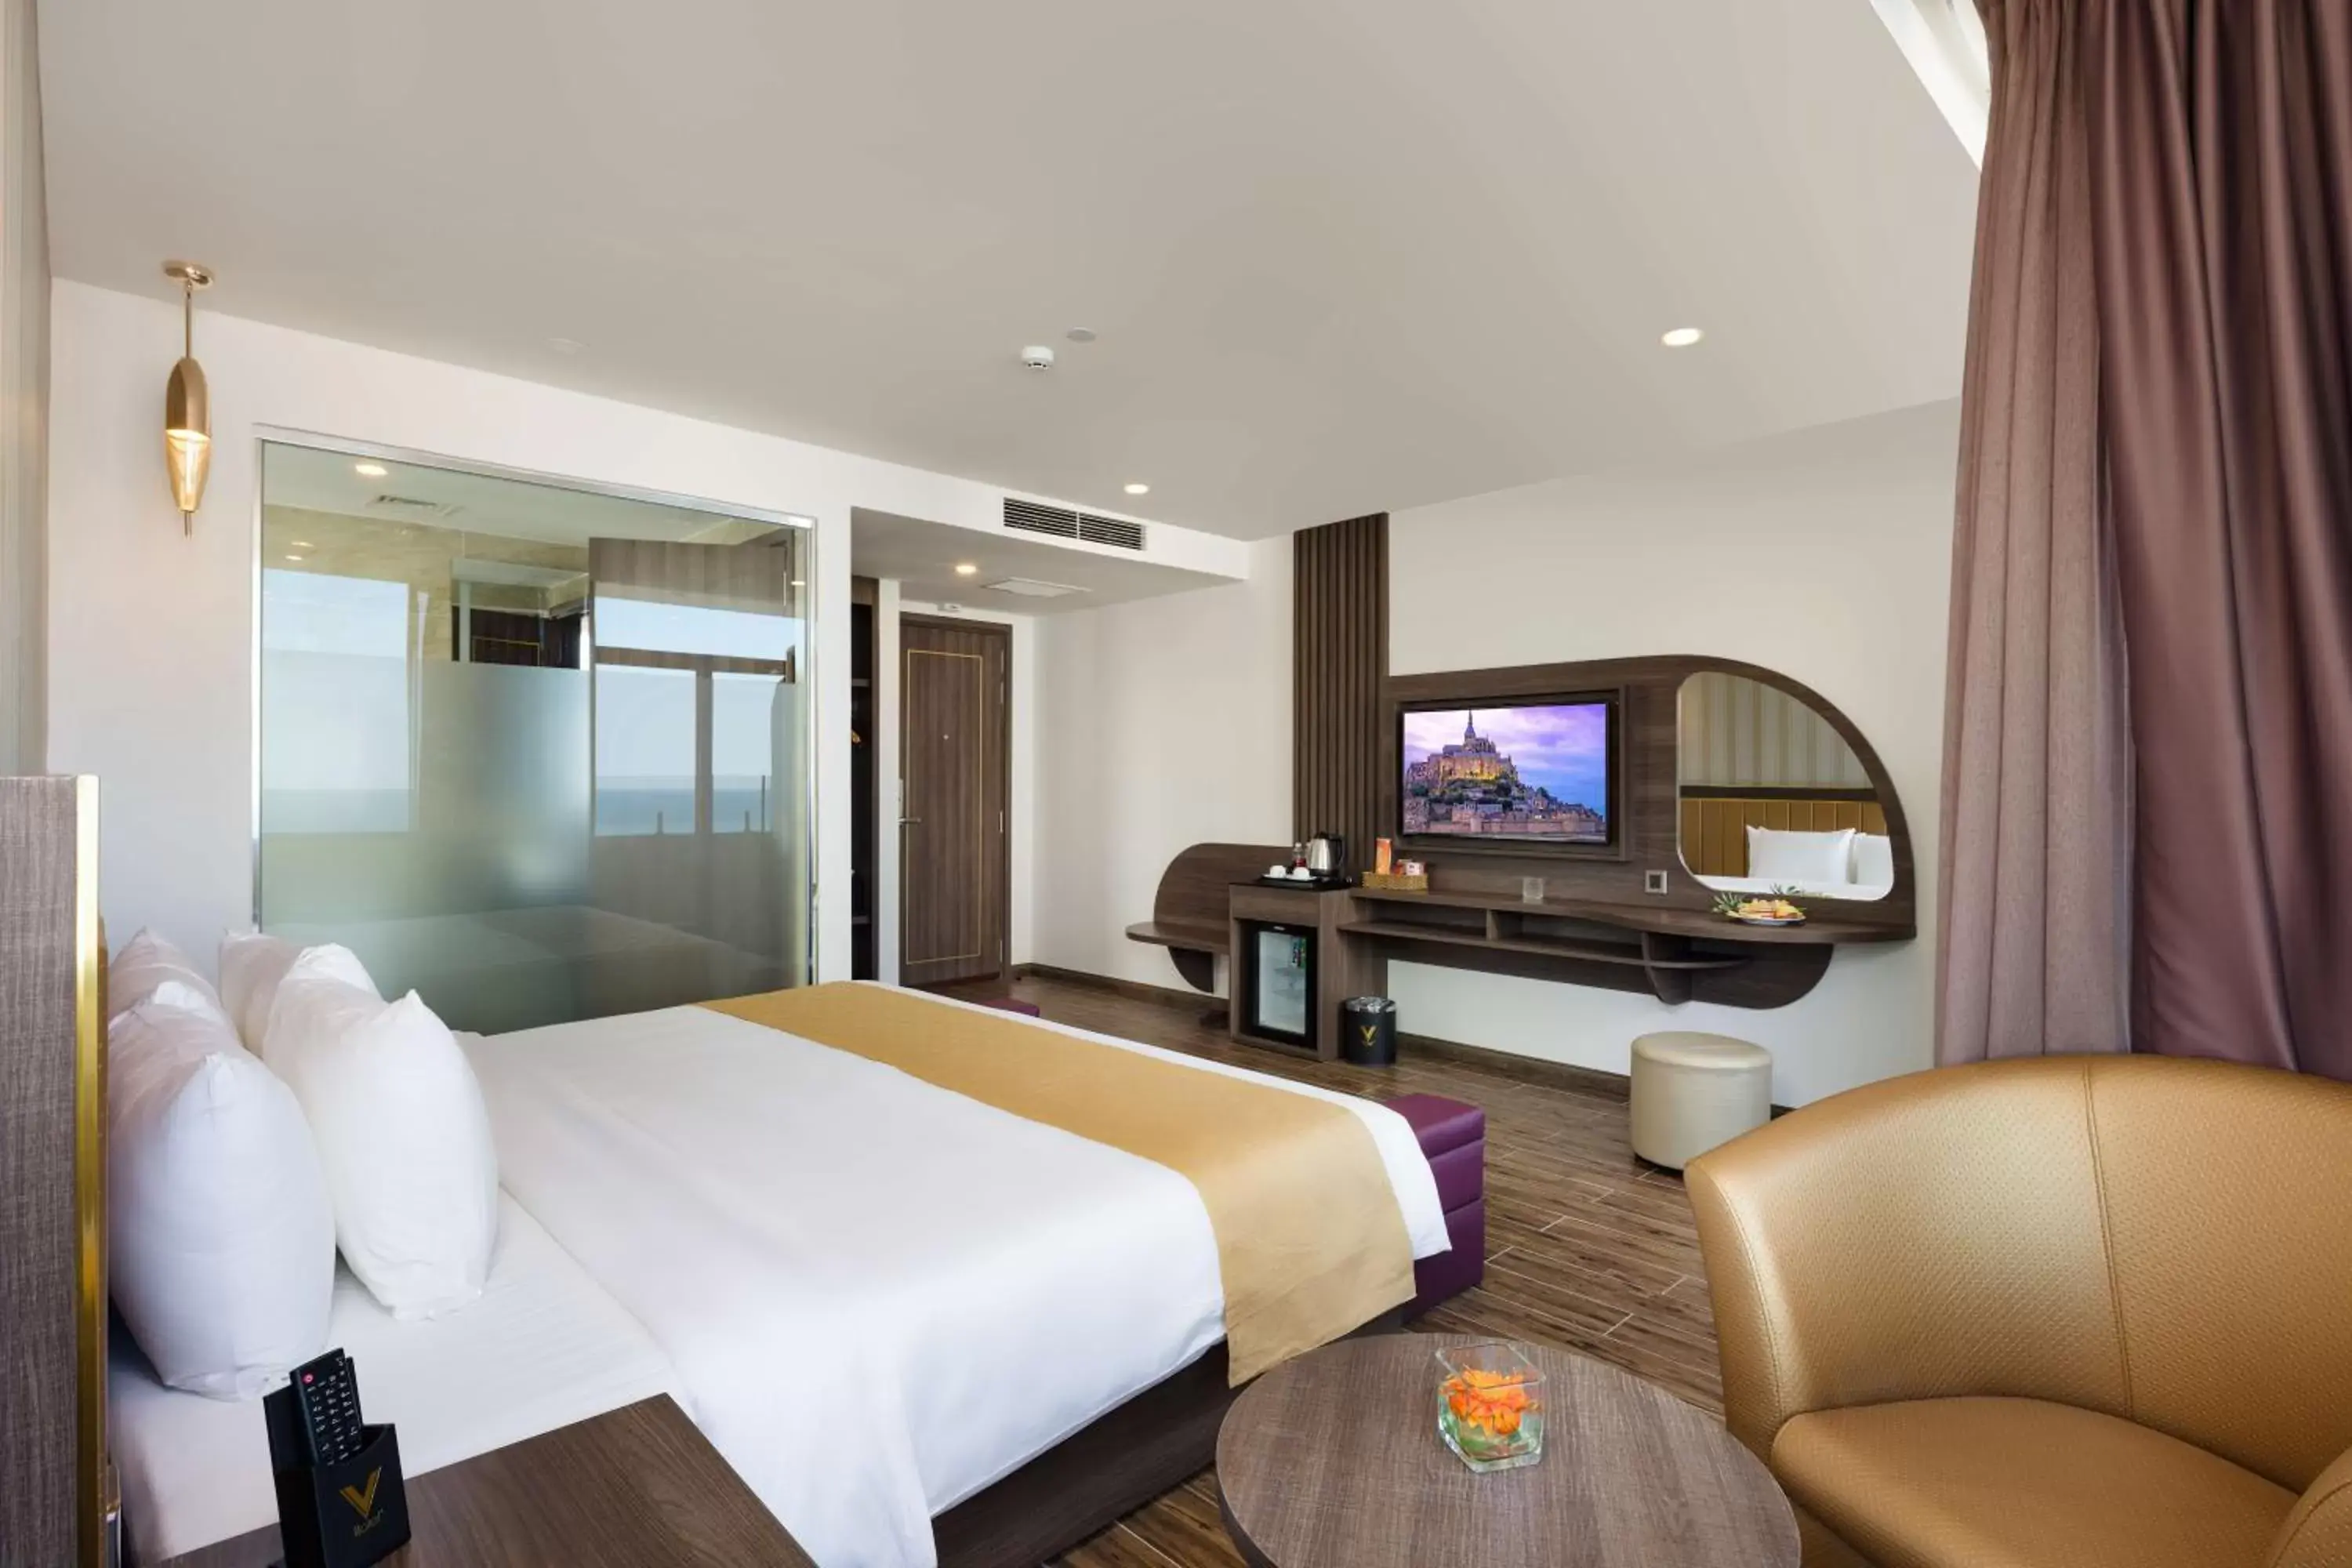 Bedroom in V Hotel Nha Trang